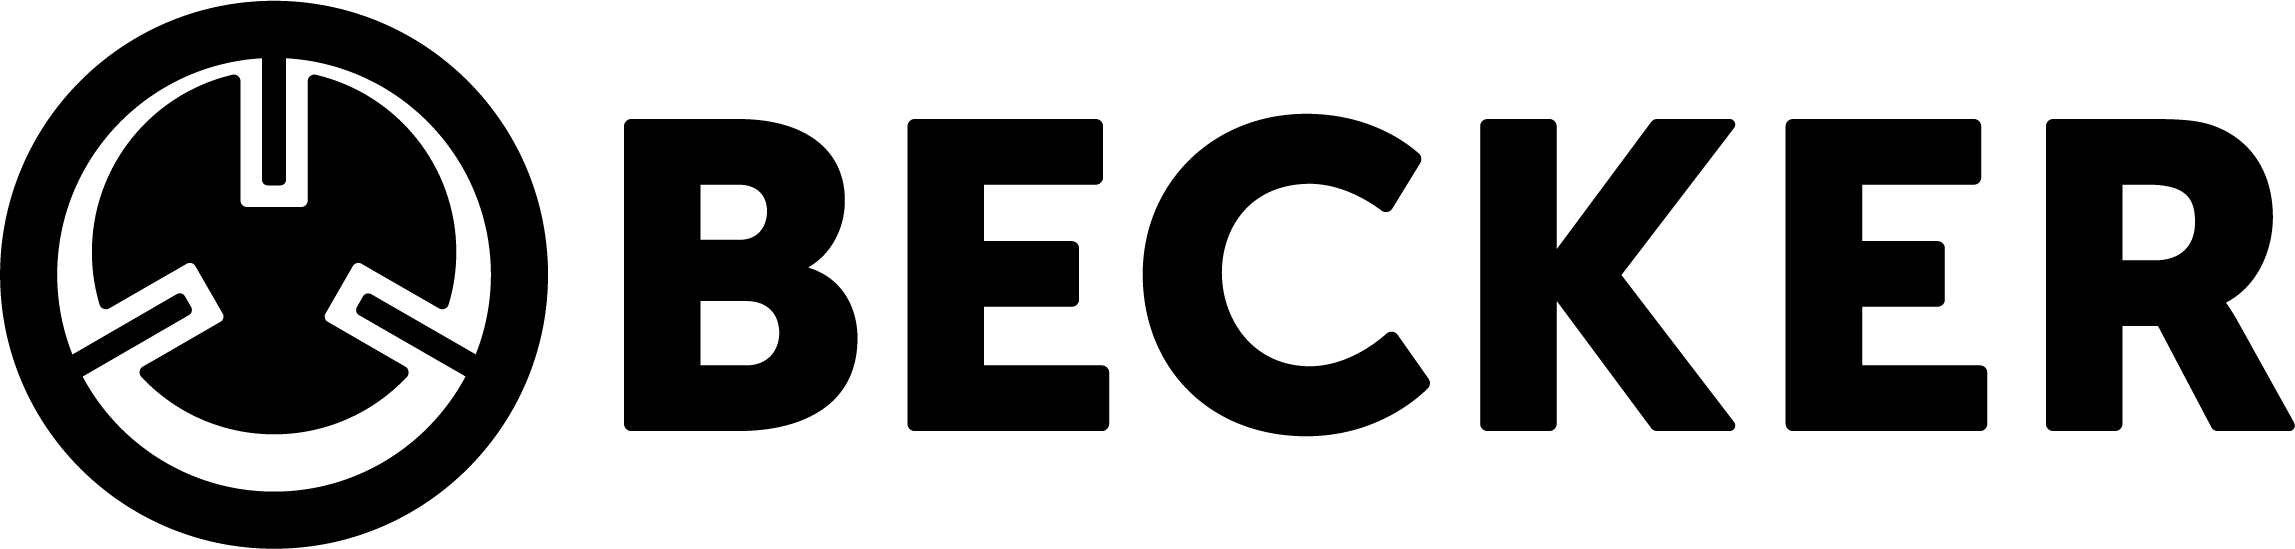 gebrueder_becker_logo